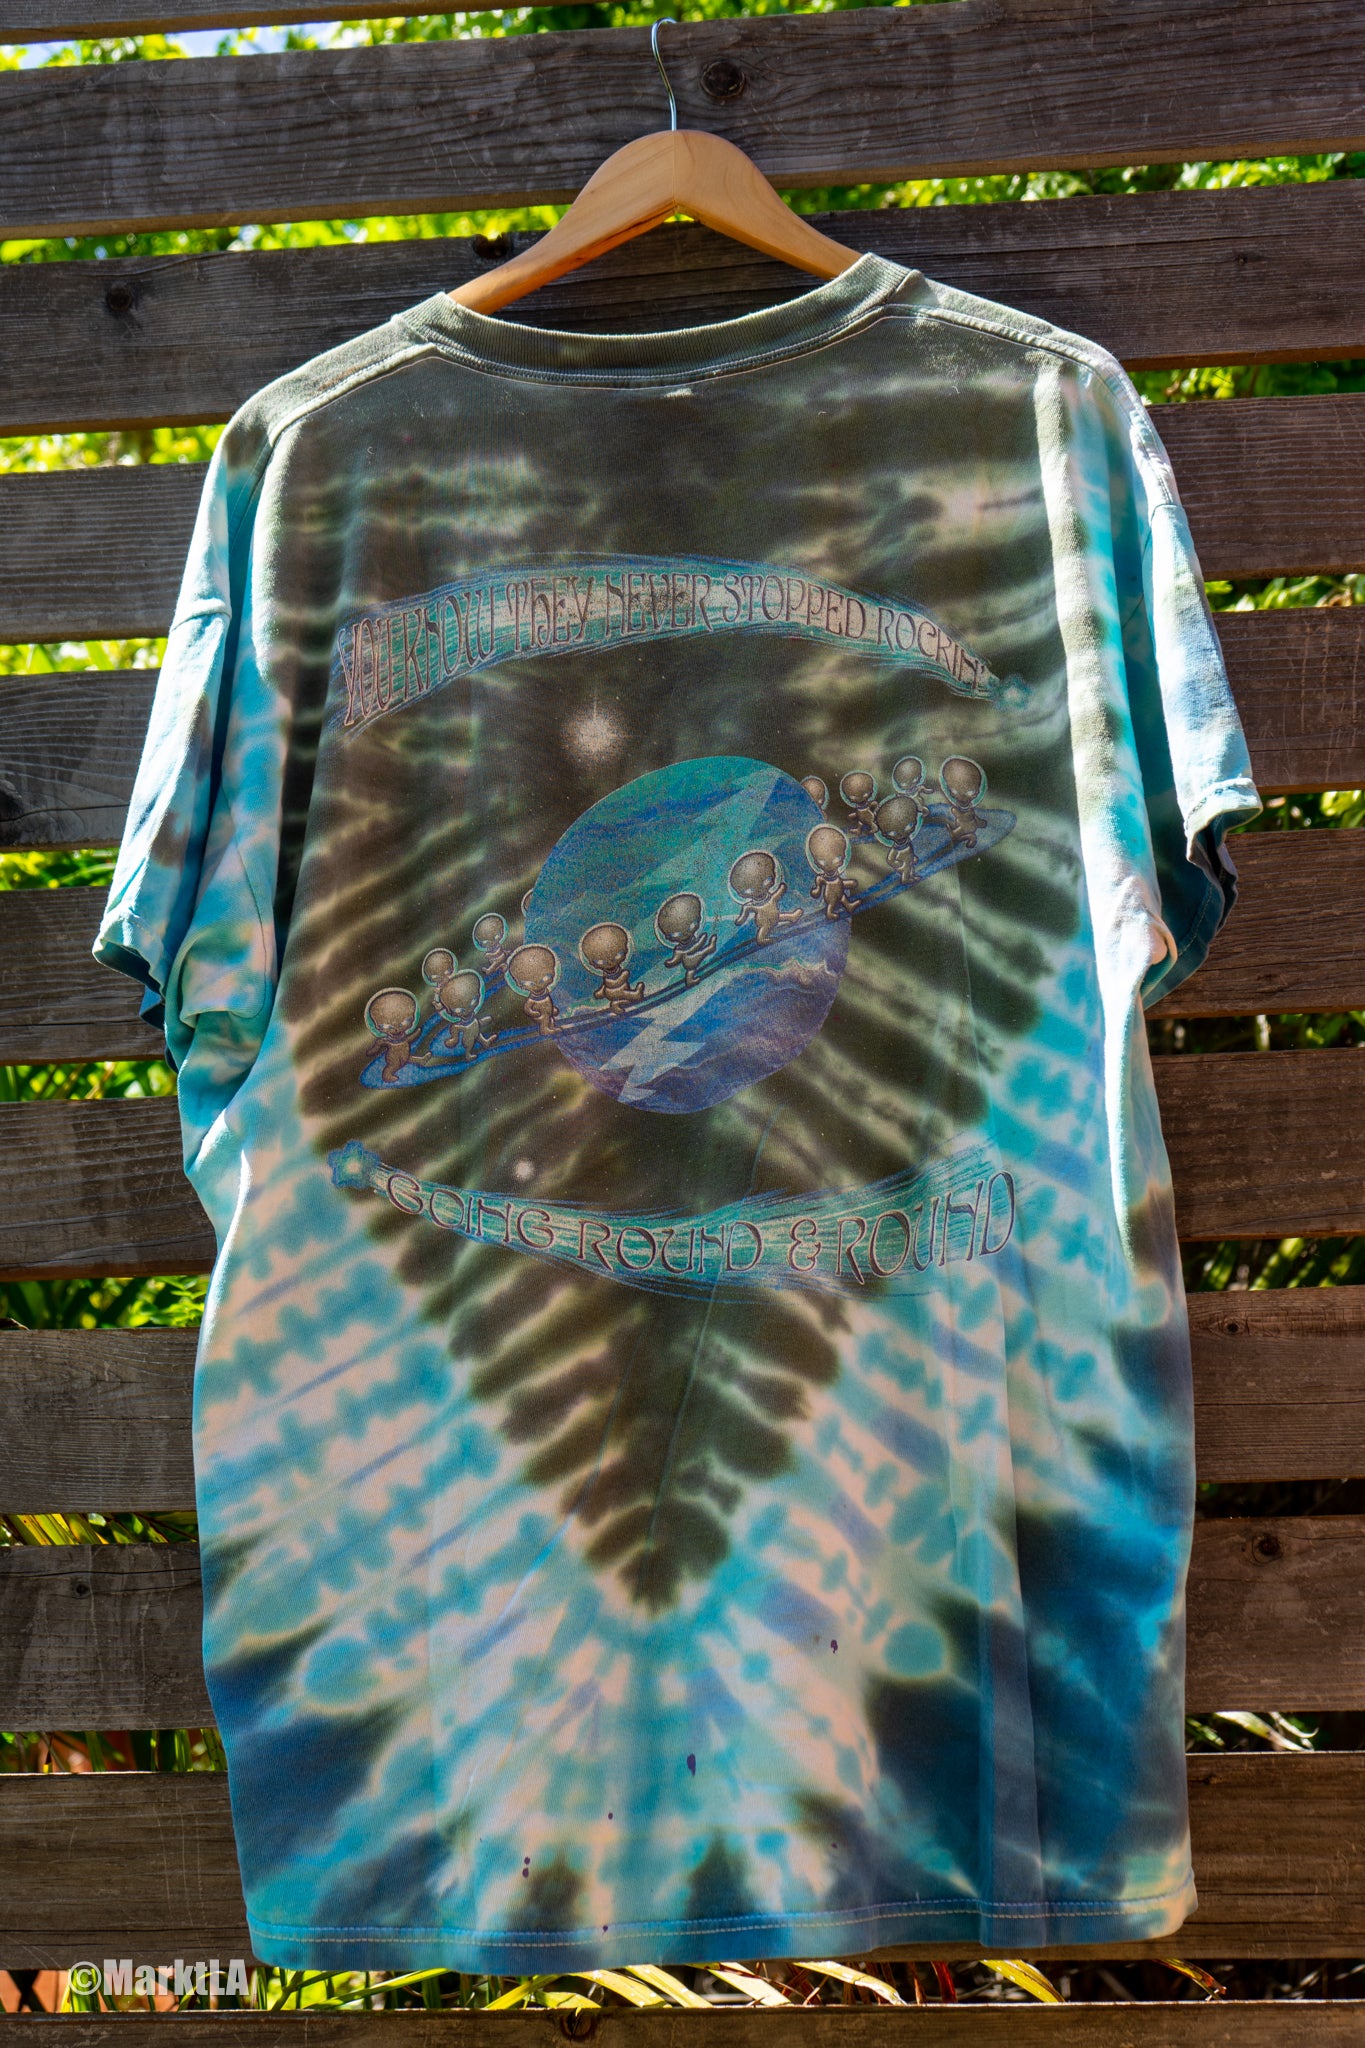 VTG 1996 Grateful Dead Encounter Your Face Shirt XL